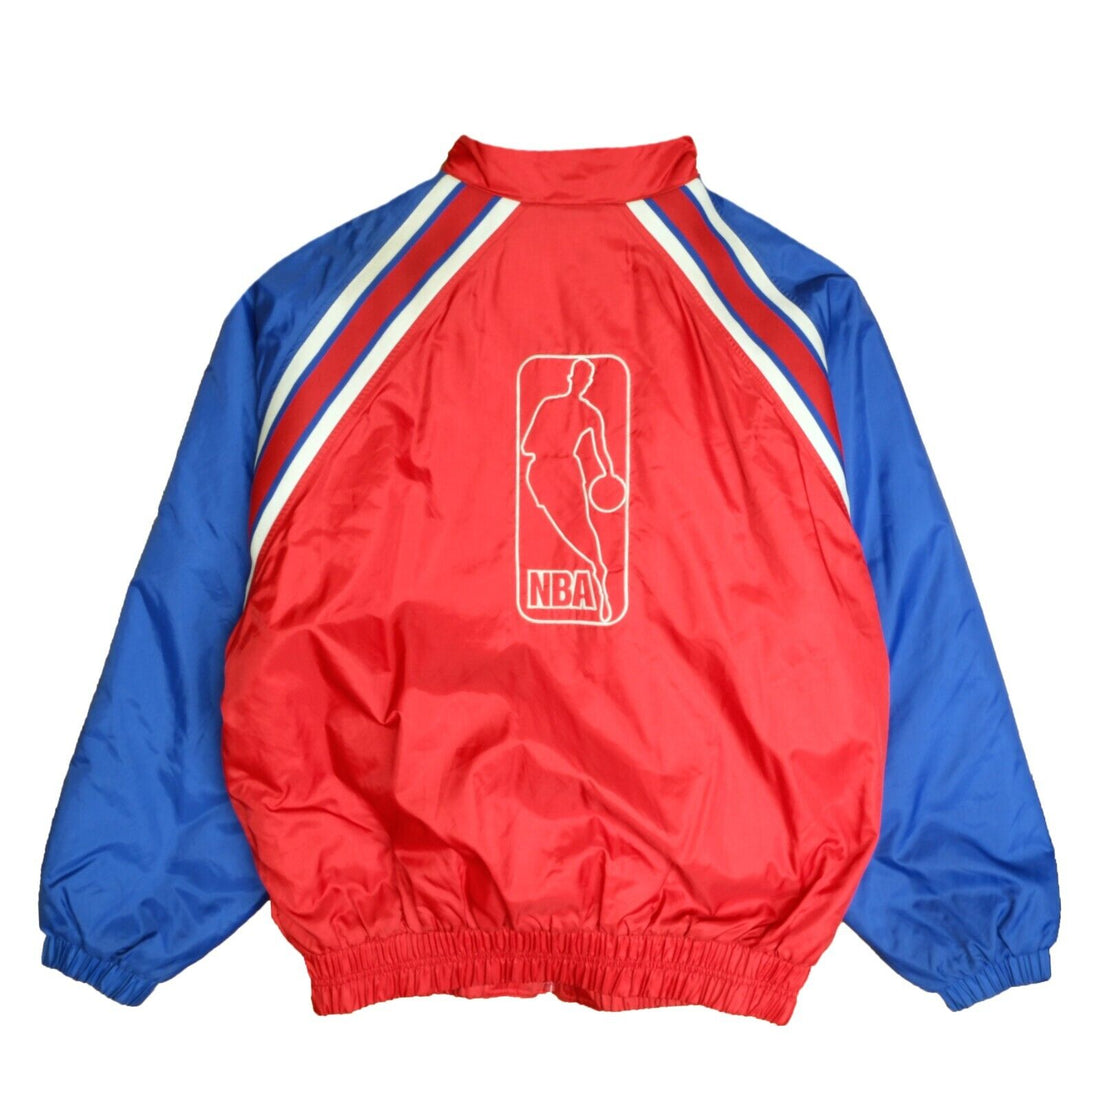 Vintage NBA Reebok Puffer Jacket Size XL Basketball 90s